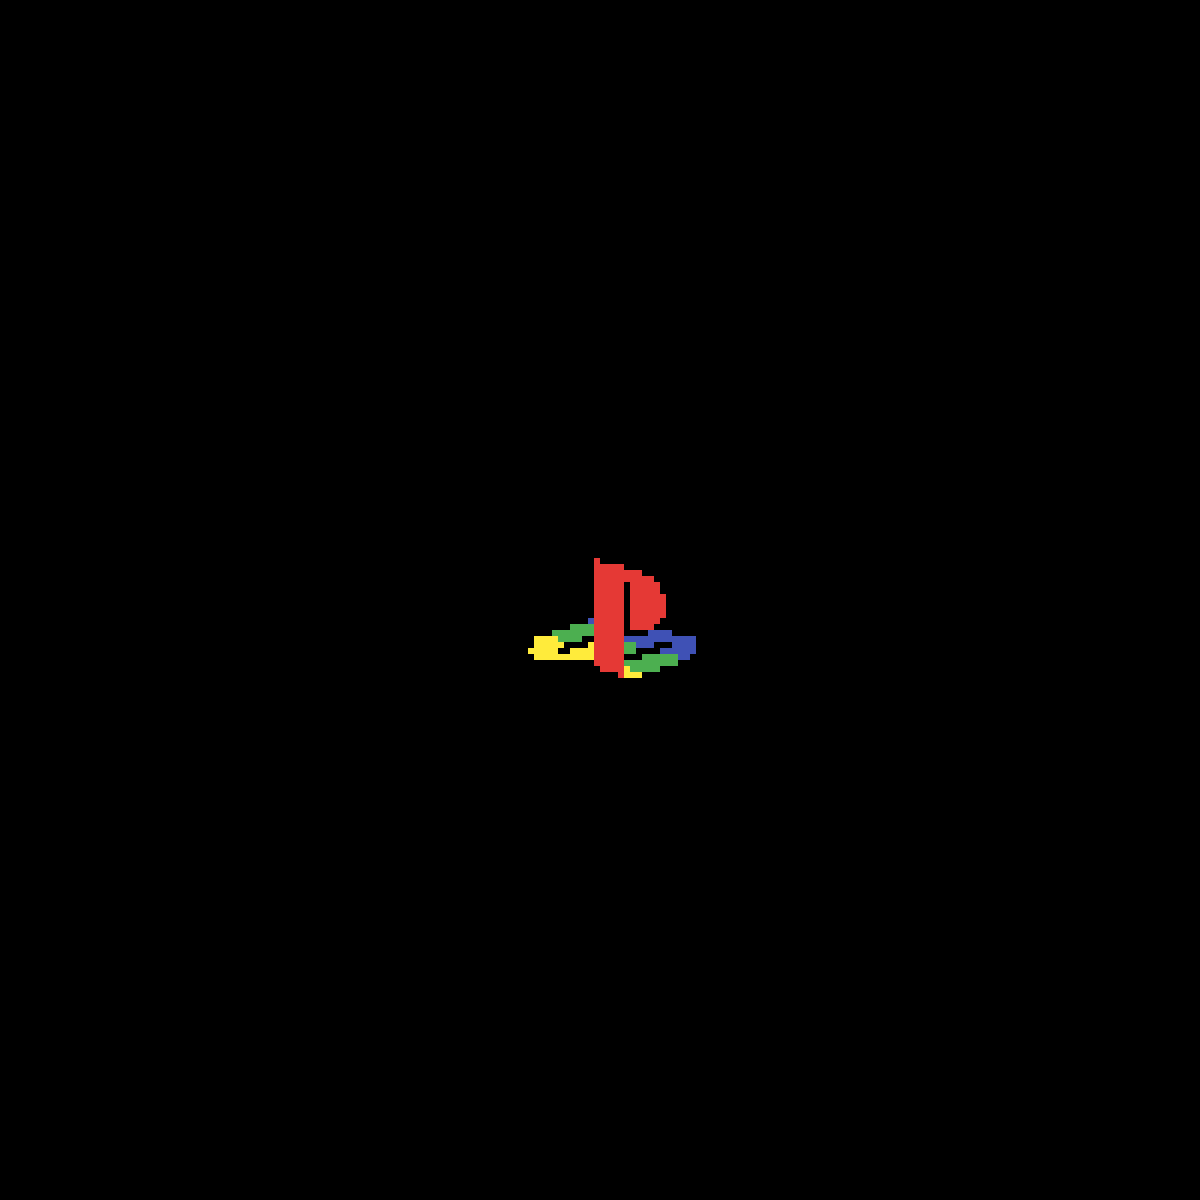 PS1 Logo - Pixilart - ps1 logo by Sycerius